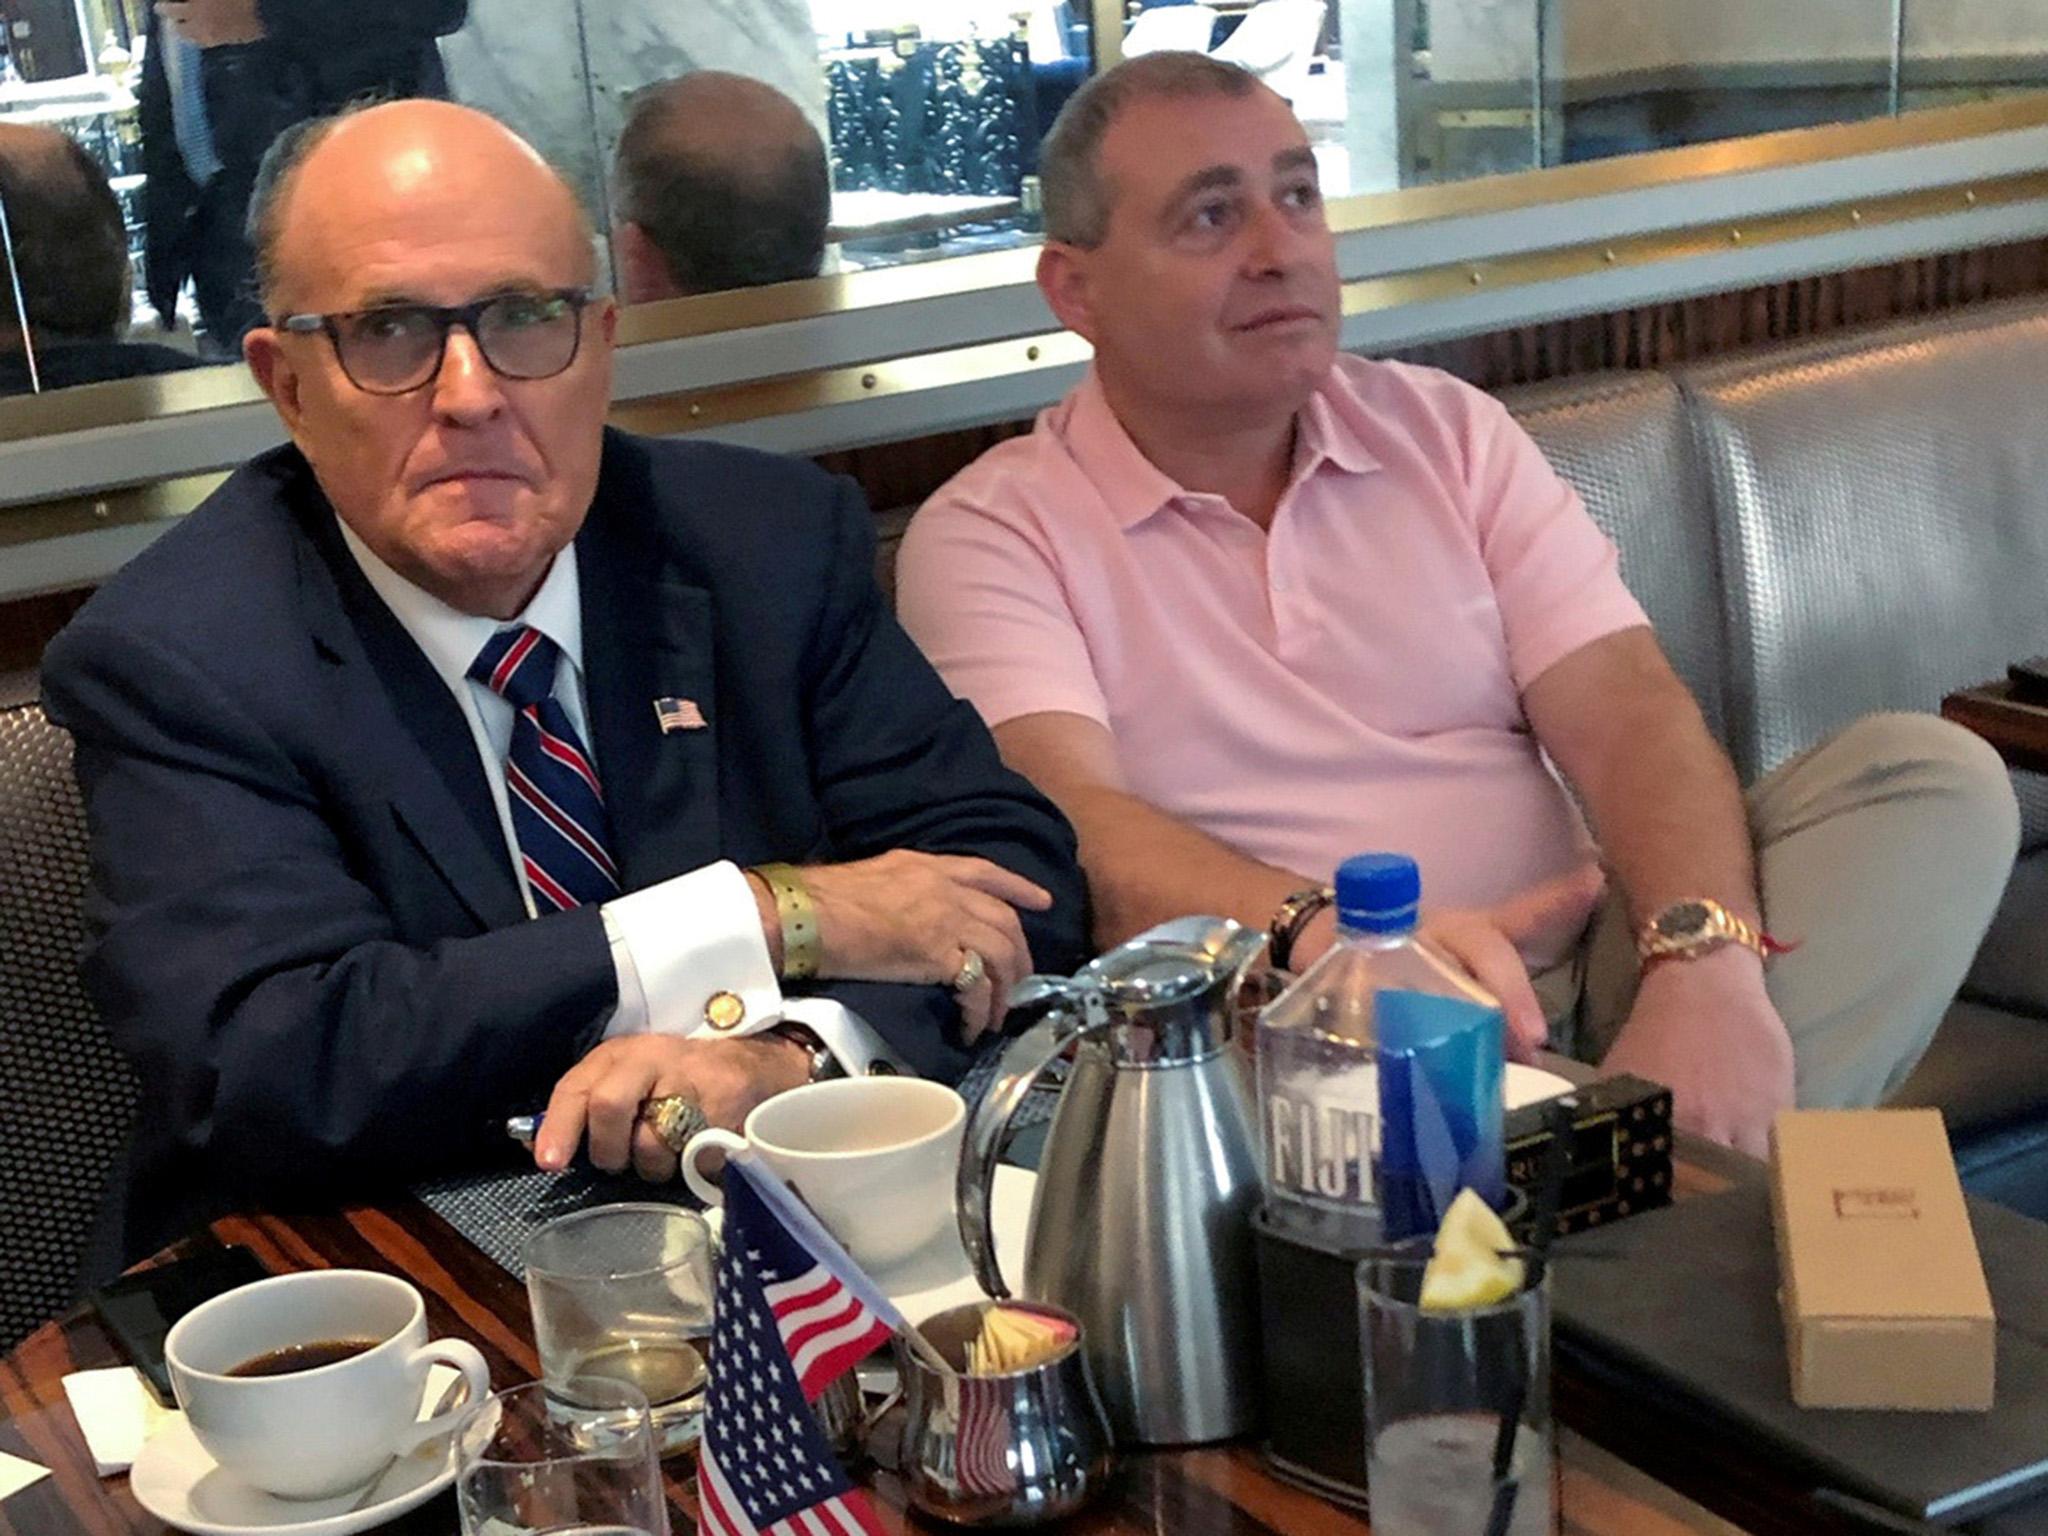 Ukrainian-American businessman Lev Parnas with President Trump's personal lawyer Rudy Giuliani at the Trump International Hotel in Washington, September 2019.